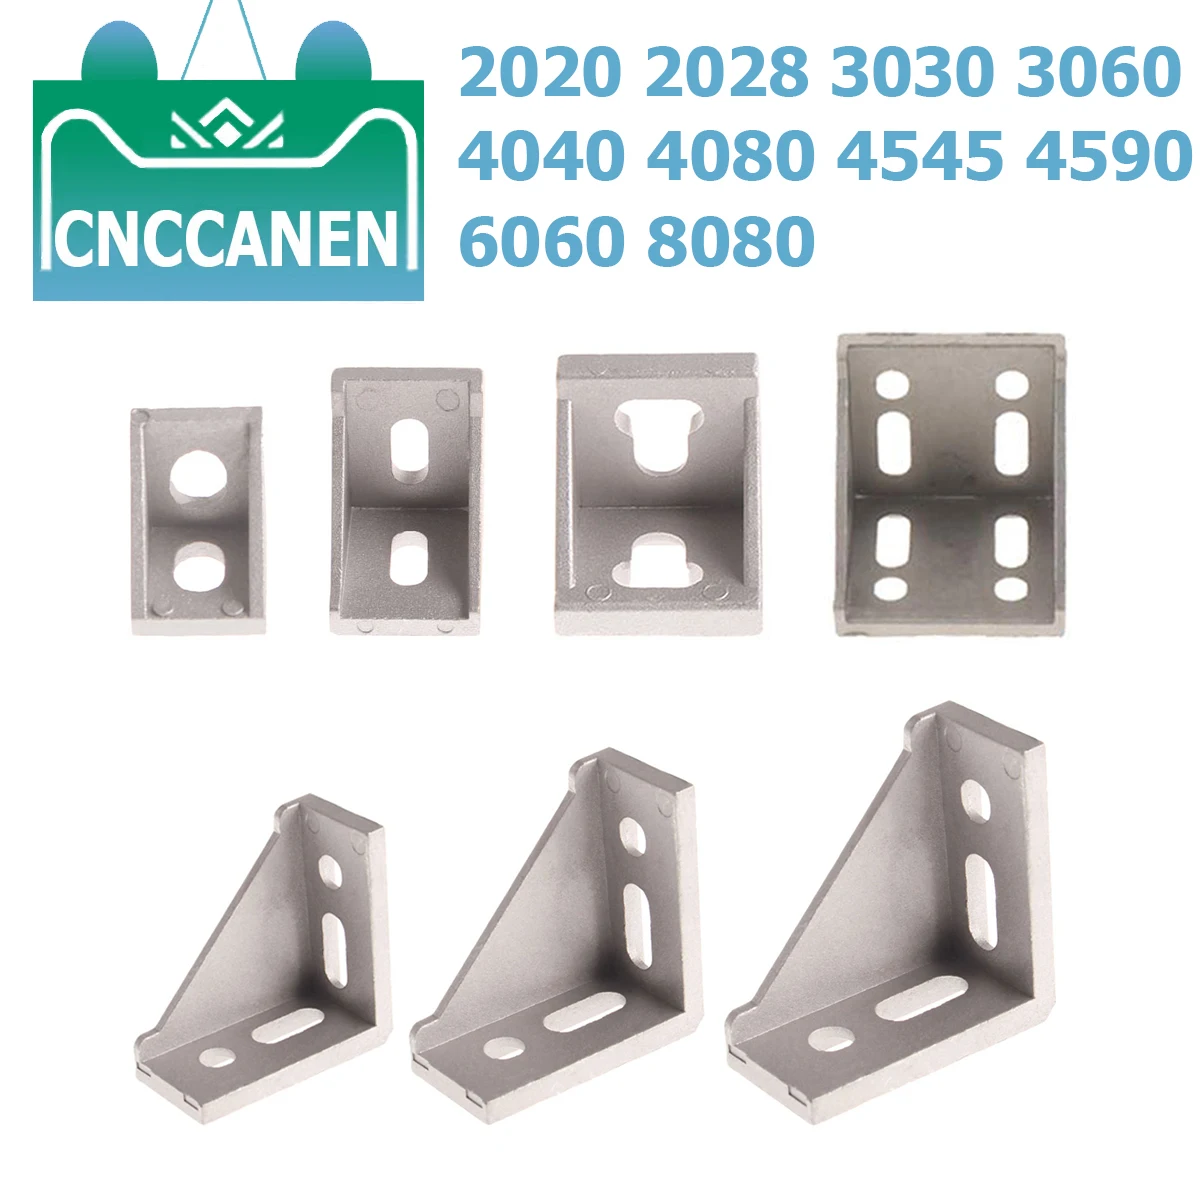 

2/5PCS 2020 2028 3030 4040 Corner Bracket Fitting Angle L Connector Bracket Fastener for Aluminium Profile CNC 4545 6060 8080